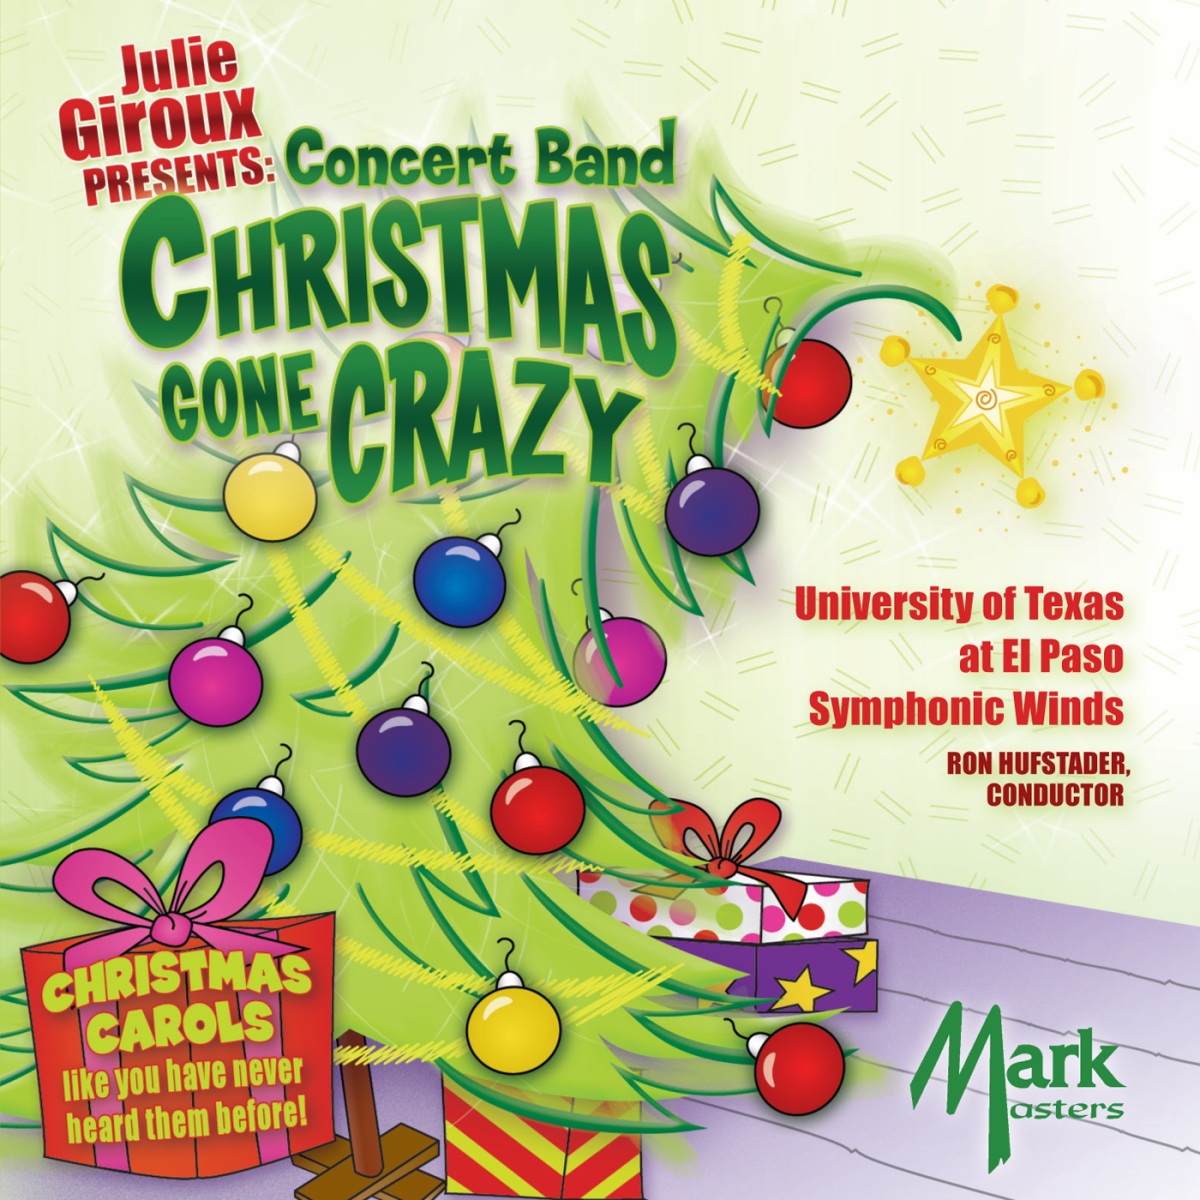 Julie Giroux Presents: Concert Band Christmas Gone Crazy - cliquer ici